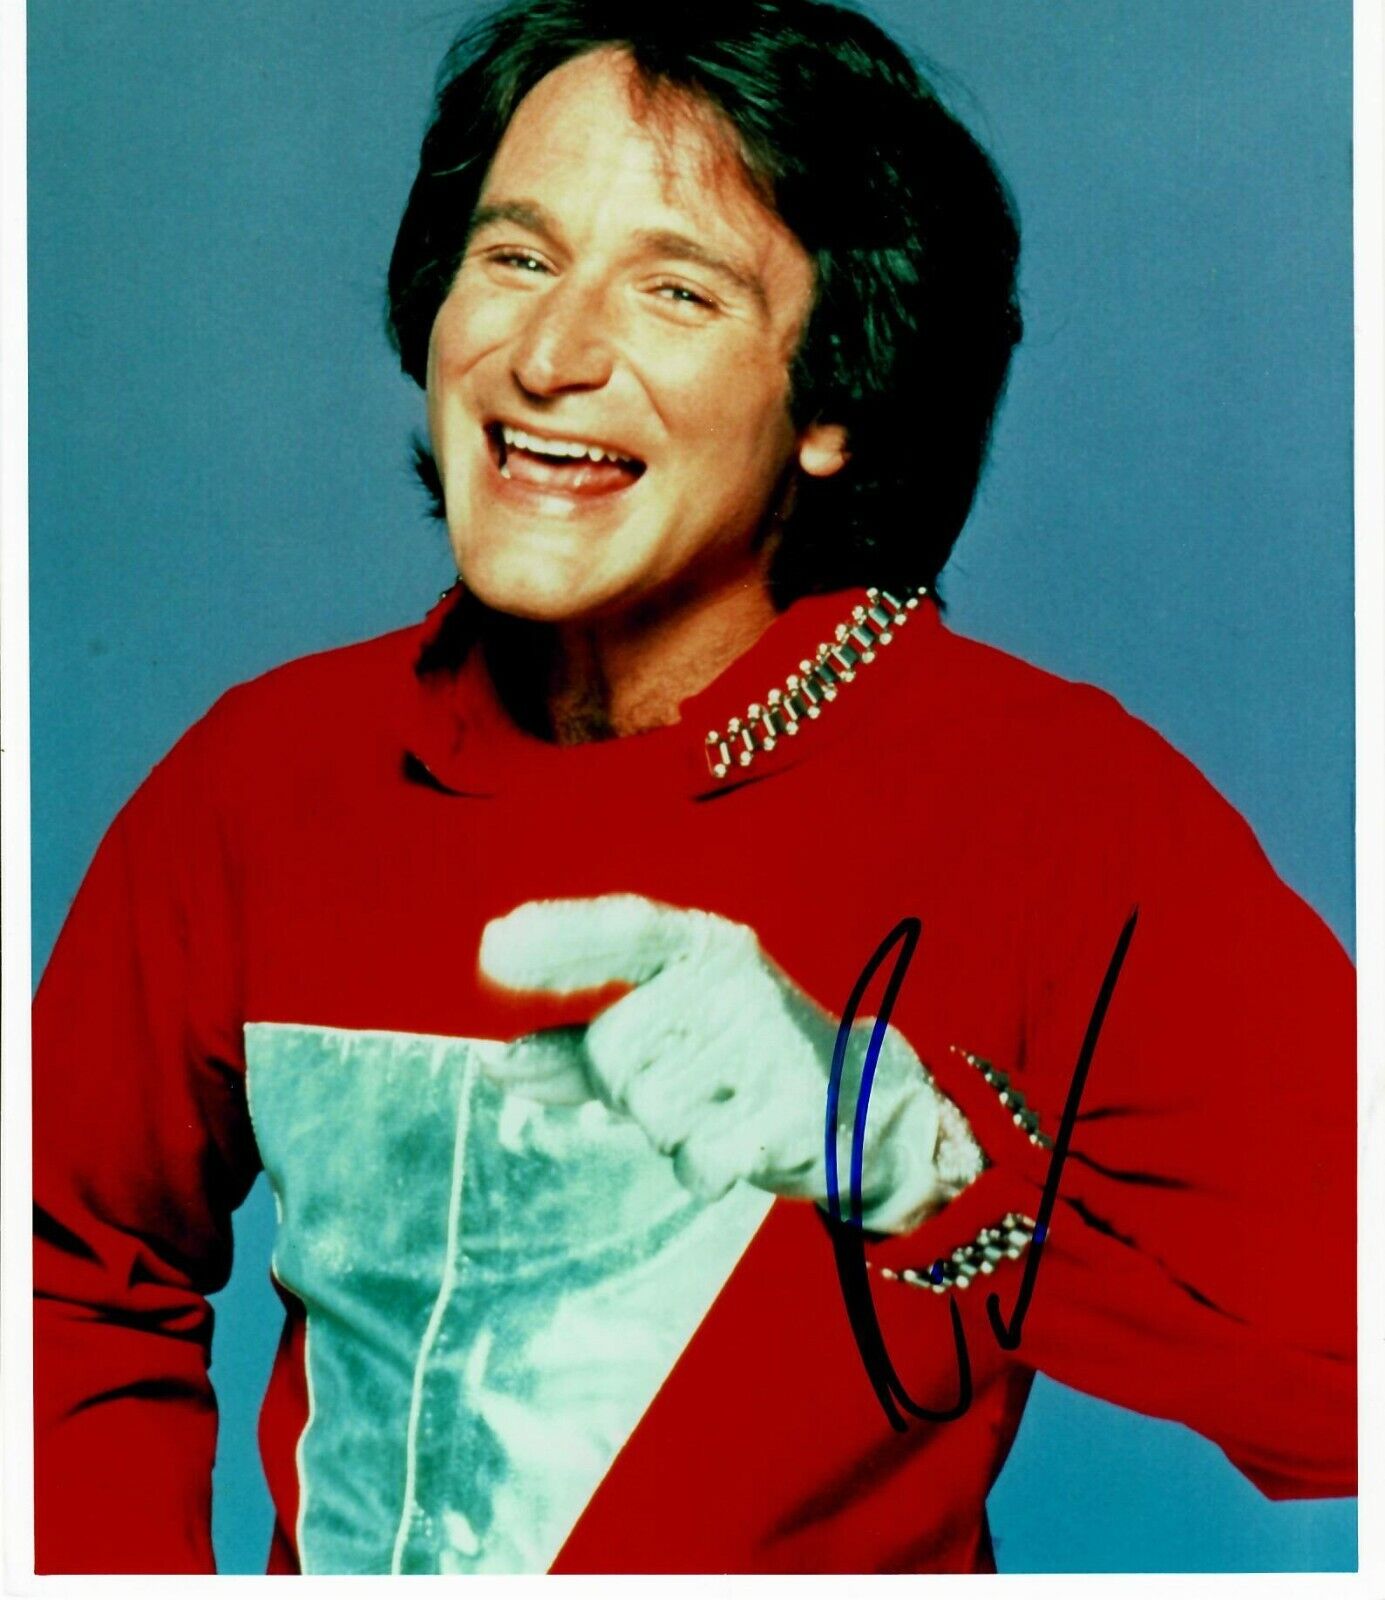 “Mork & Mindy” Robin Williams Signed 8X10 Color Photo COA